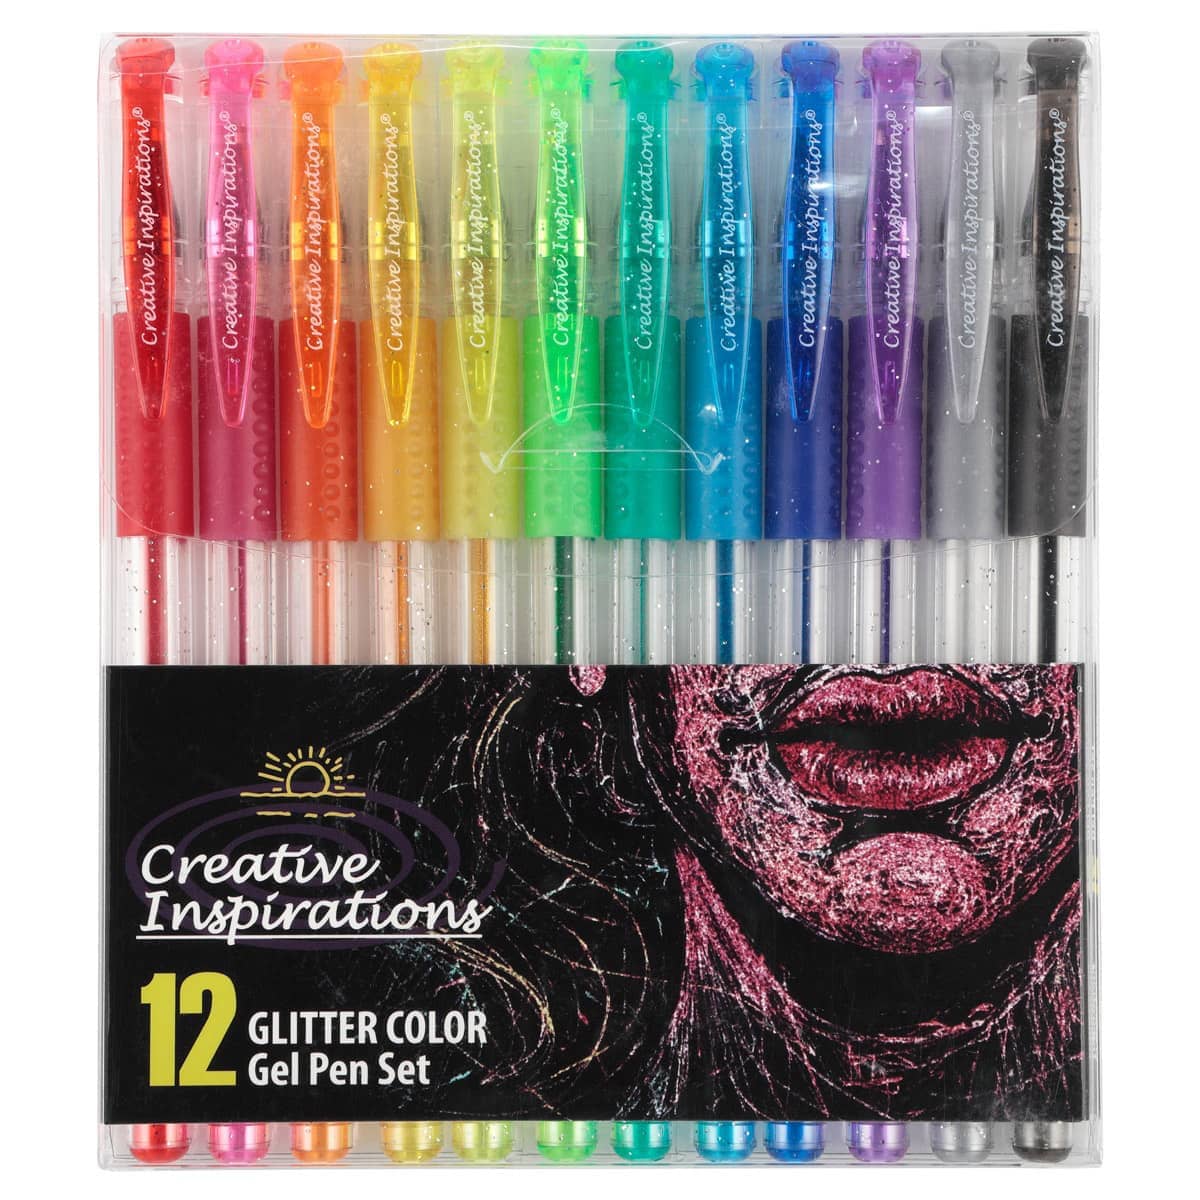 Creative Inspirations Gel Pen Color Glitter Set Of 12